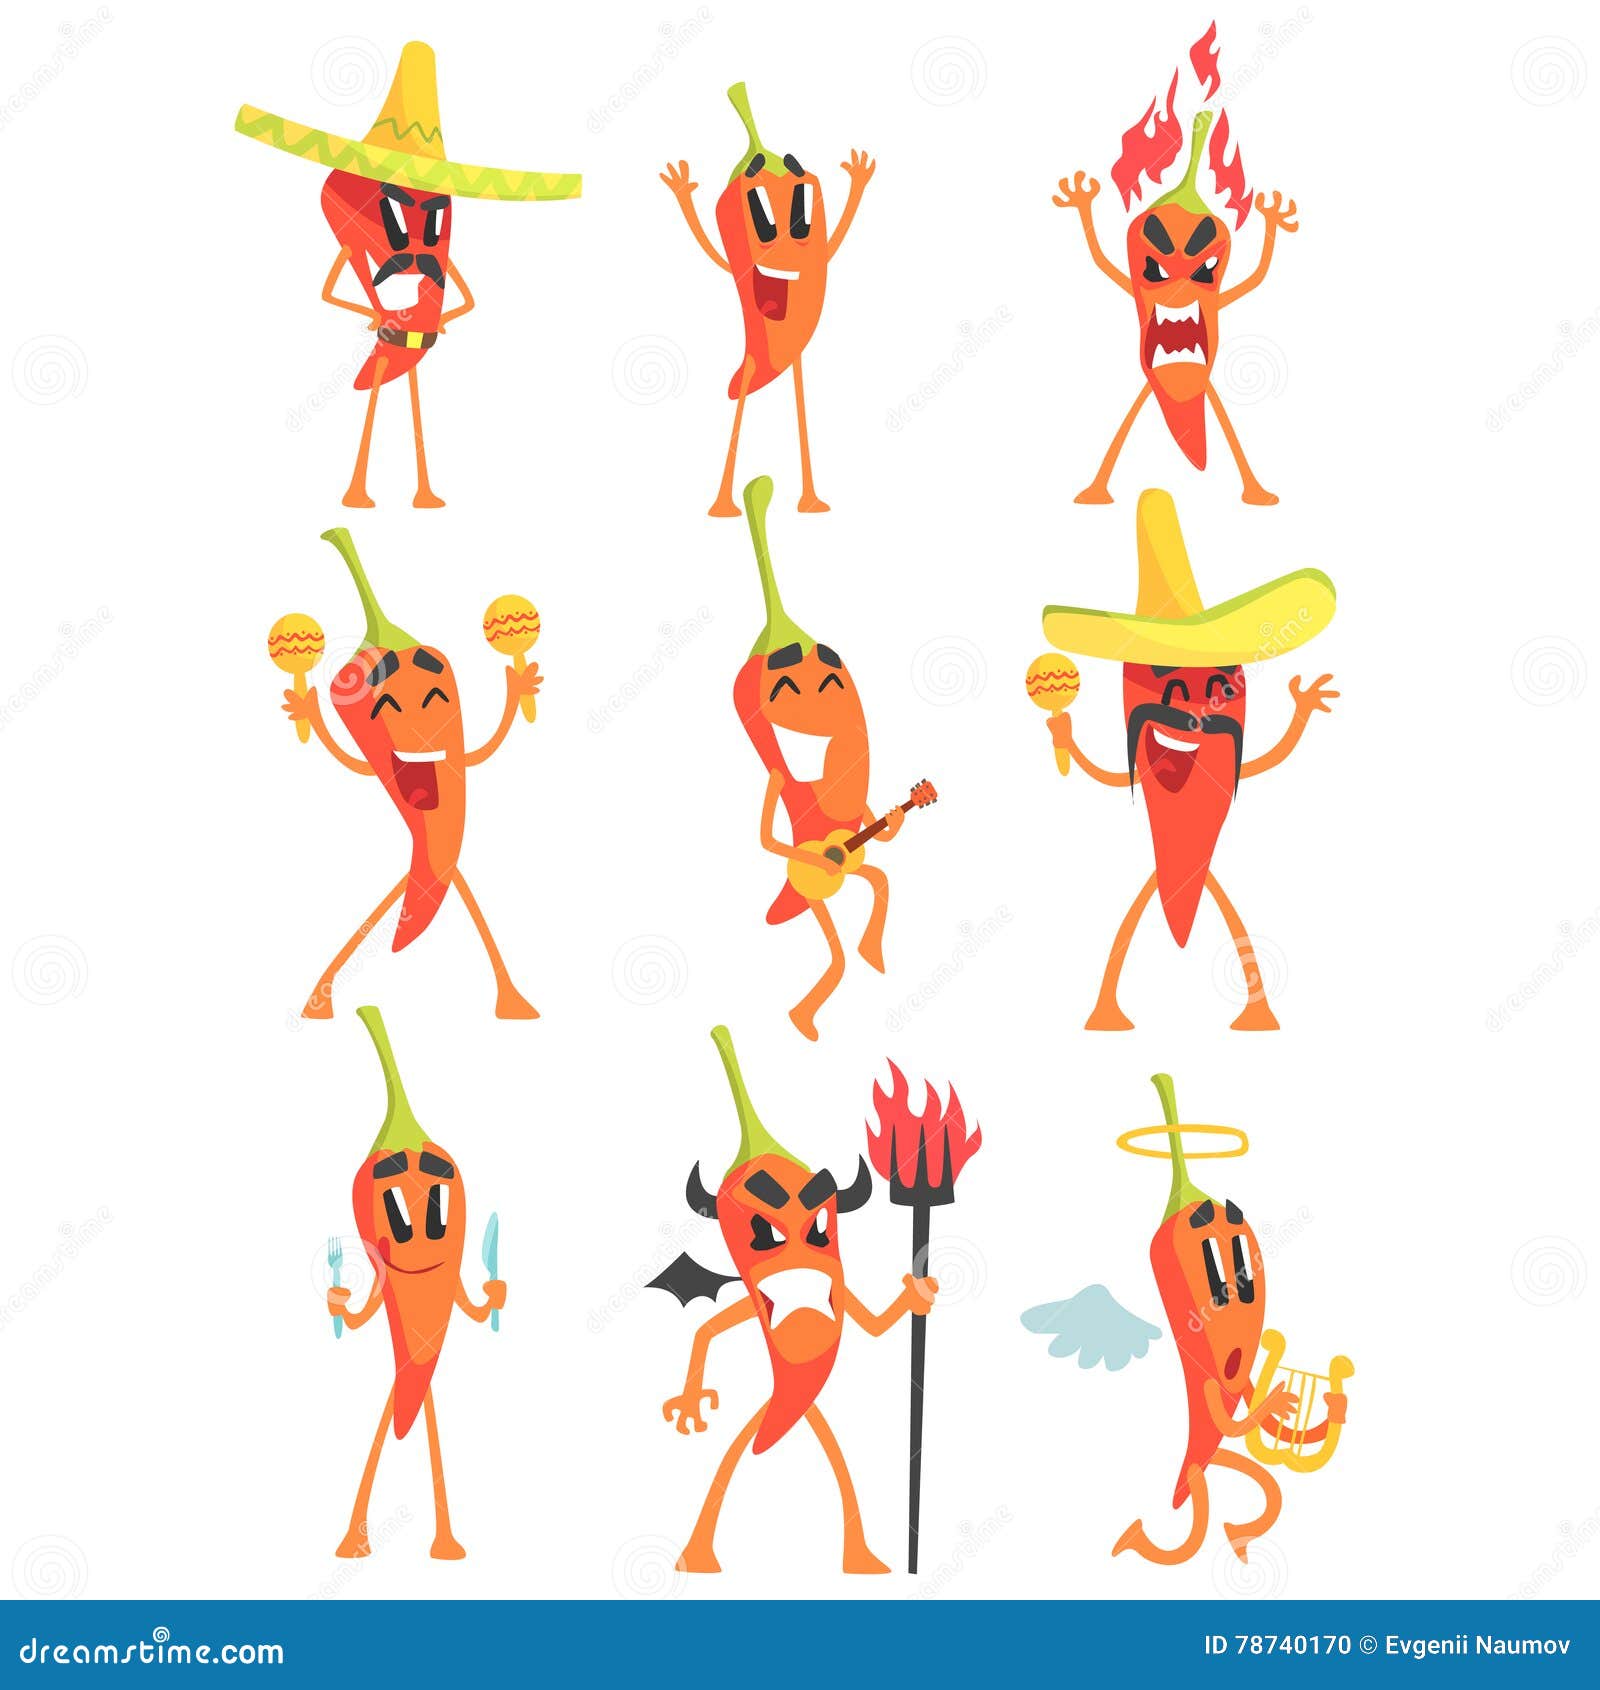 chili pepper cartoon character emotion s set